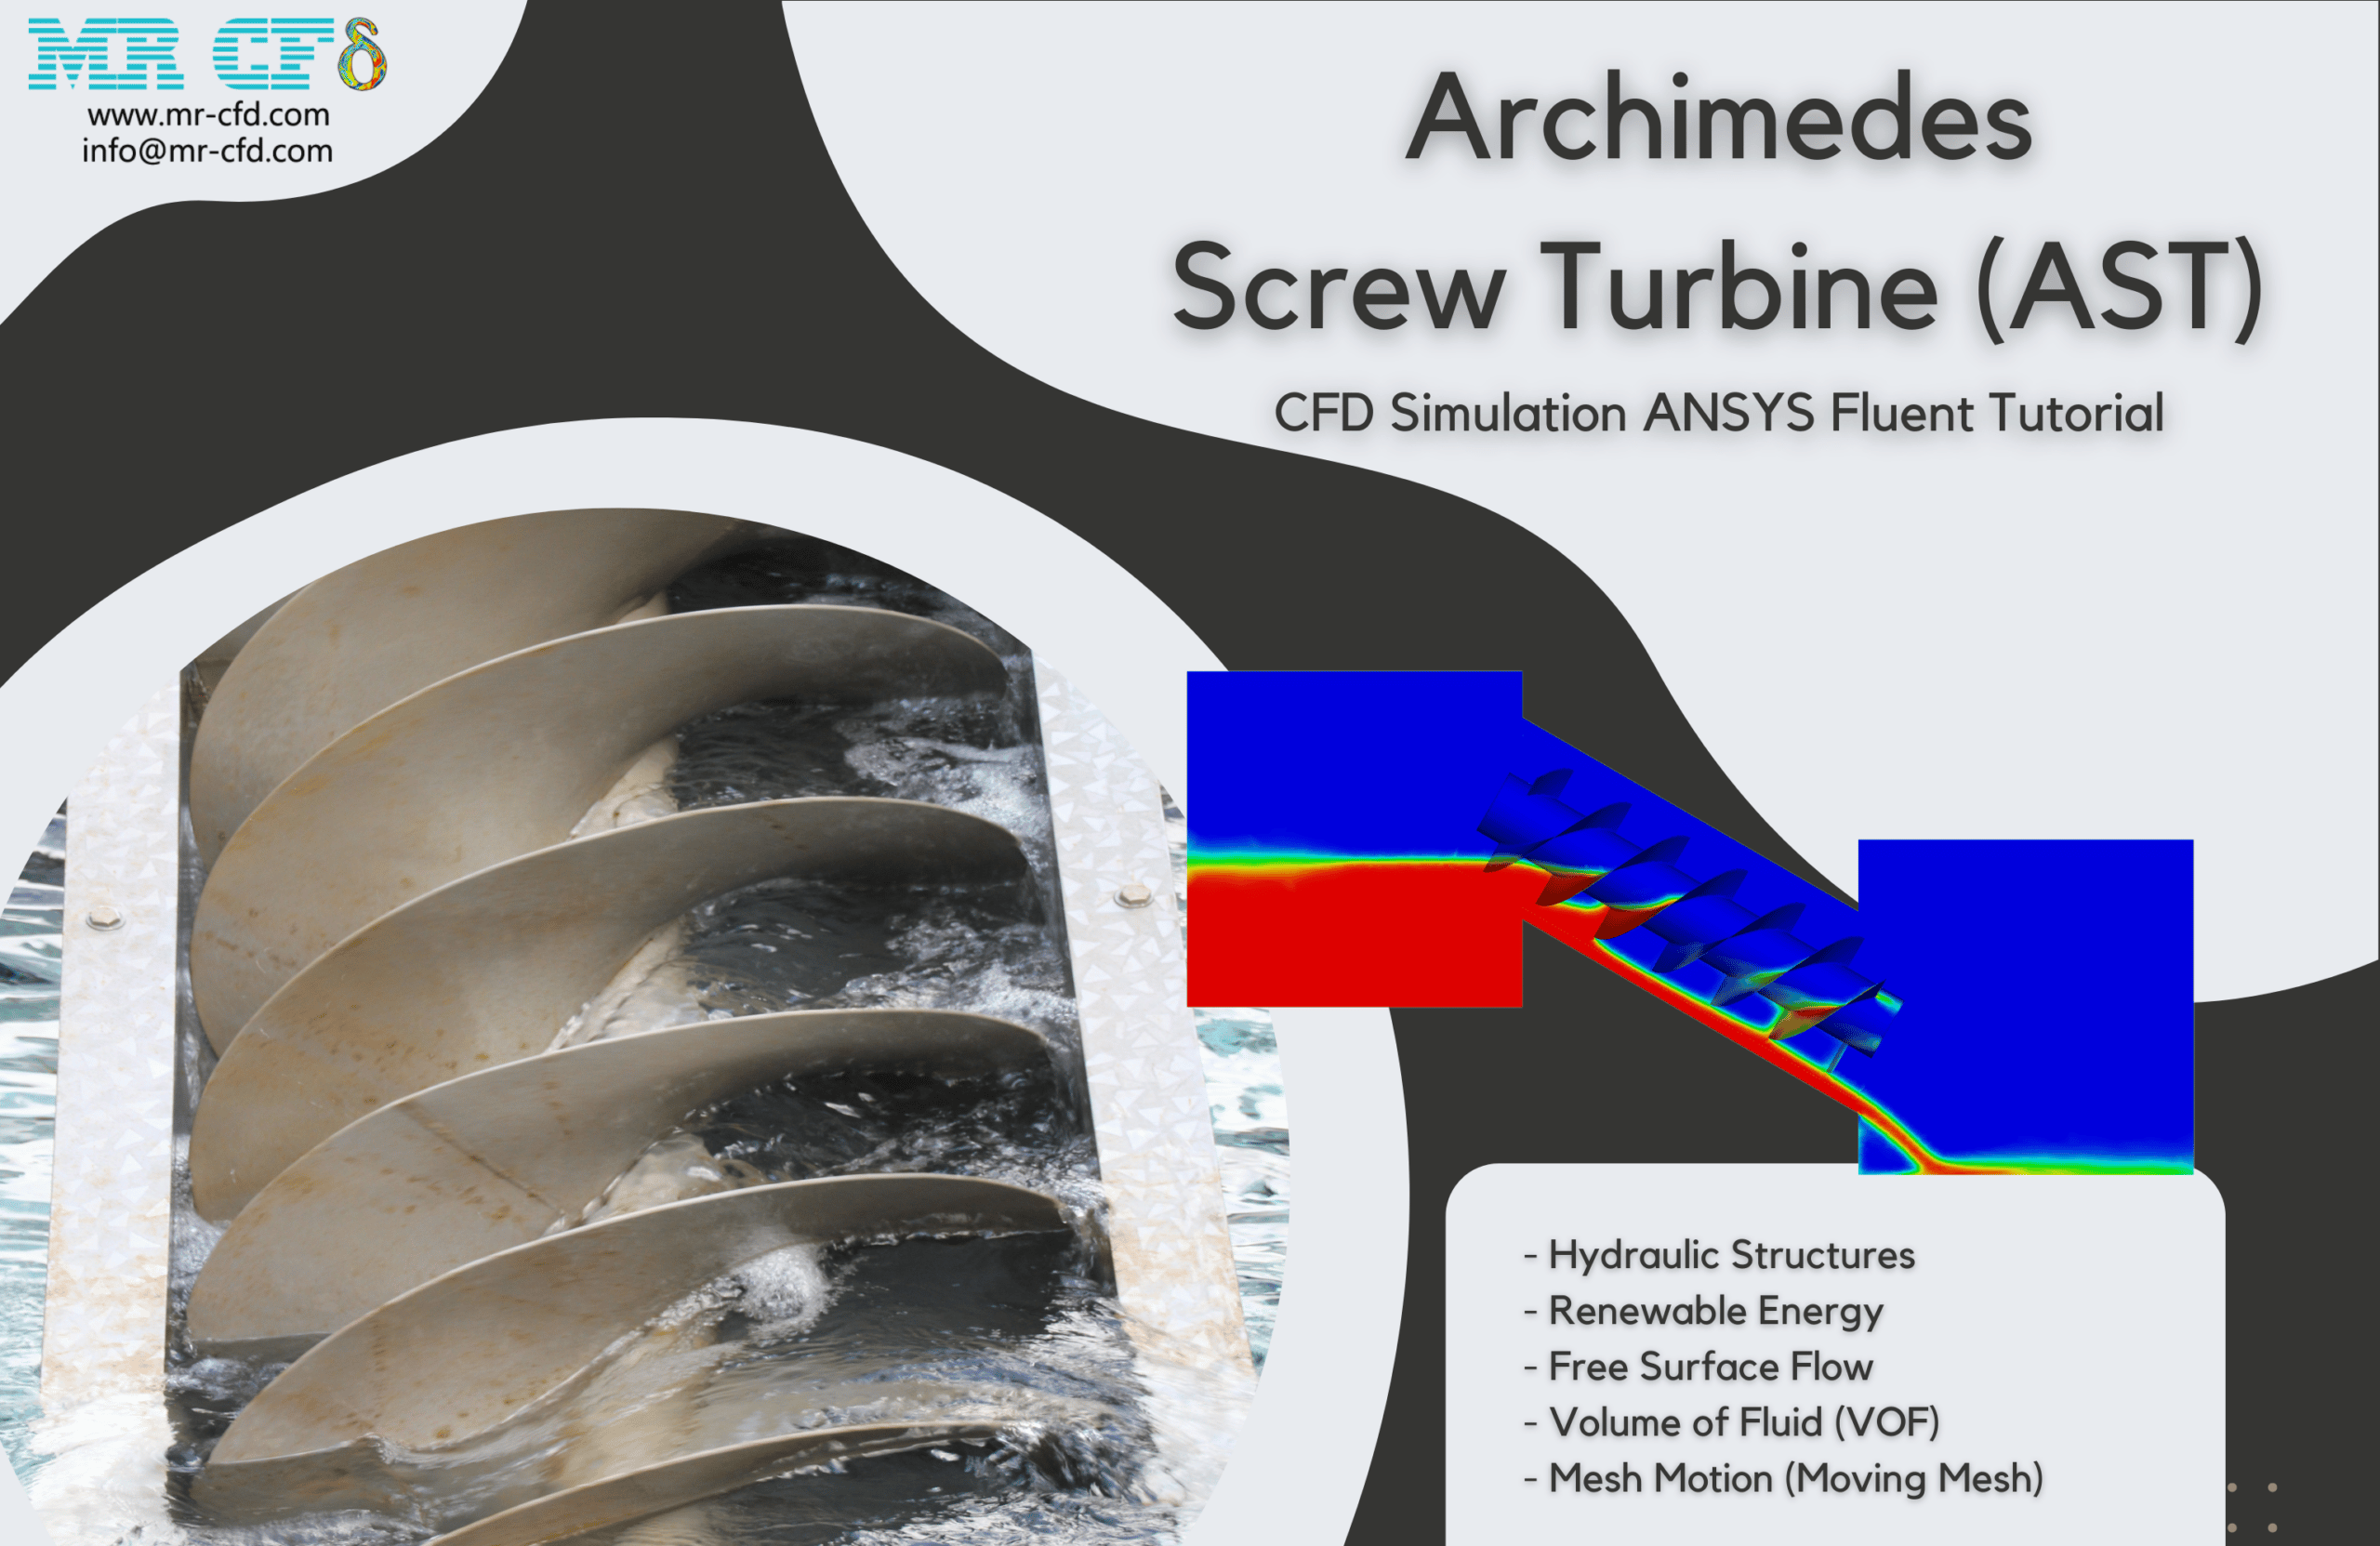 Archimedes Screw Turbine (AST) CFD Simulation - MR CFD